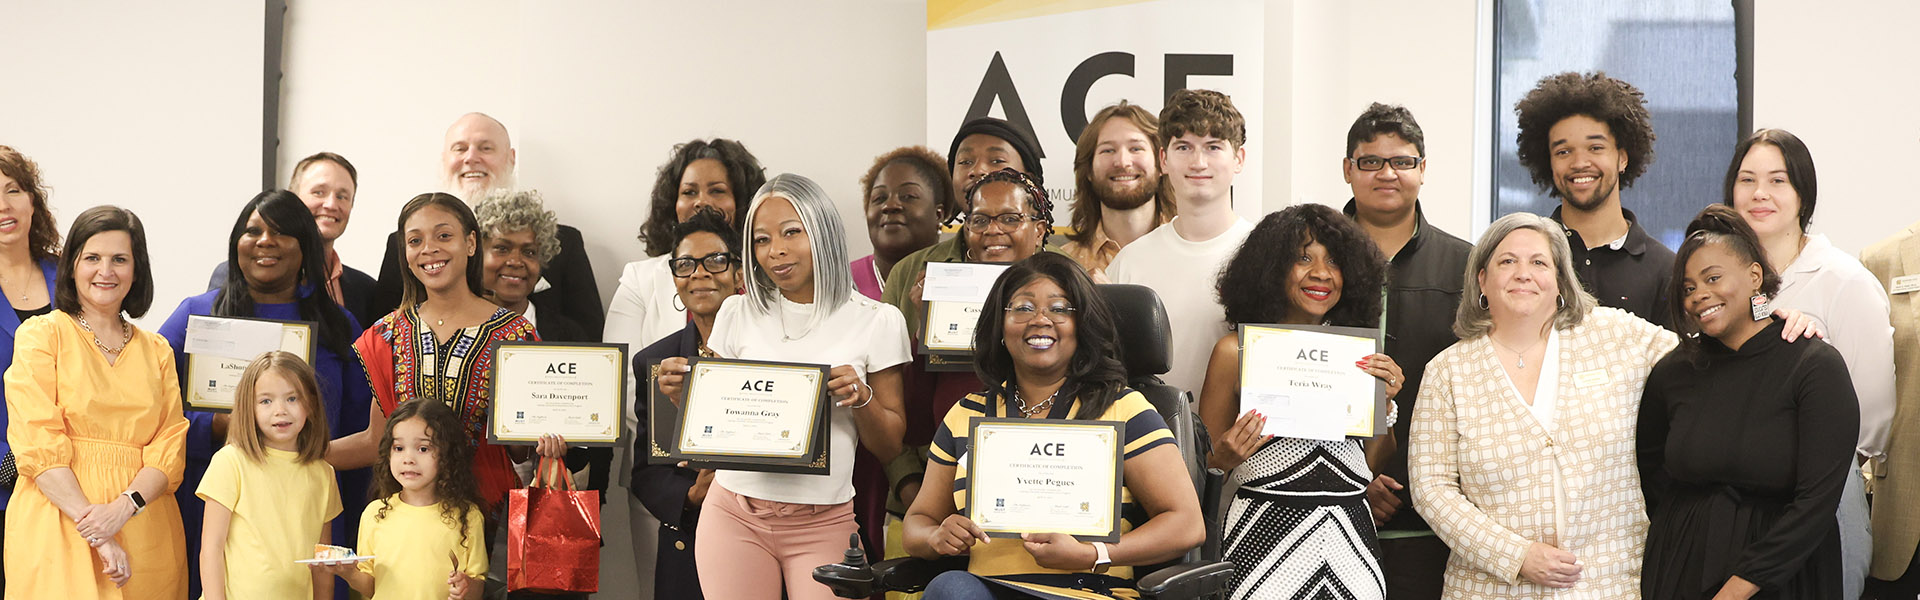 A group photo of ACE graduates.